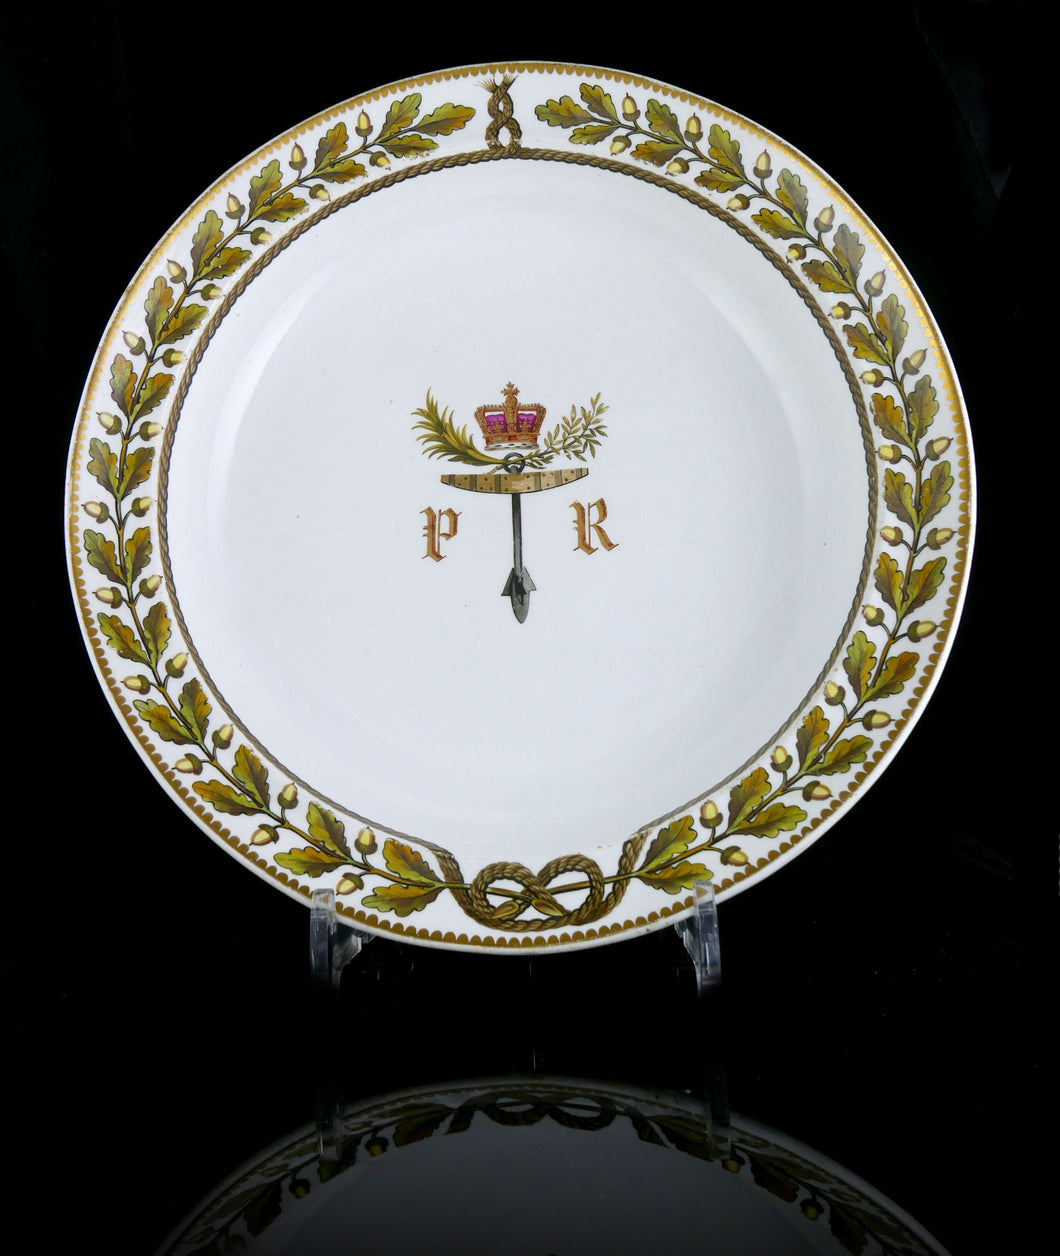 Prince Regent Royal Yacht Serving Dish, 1817